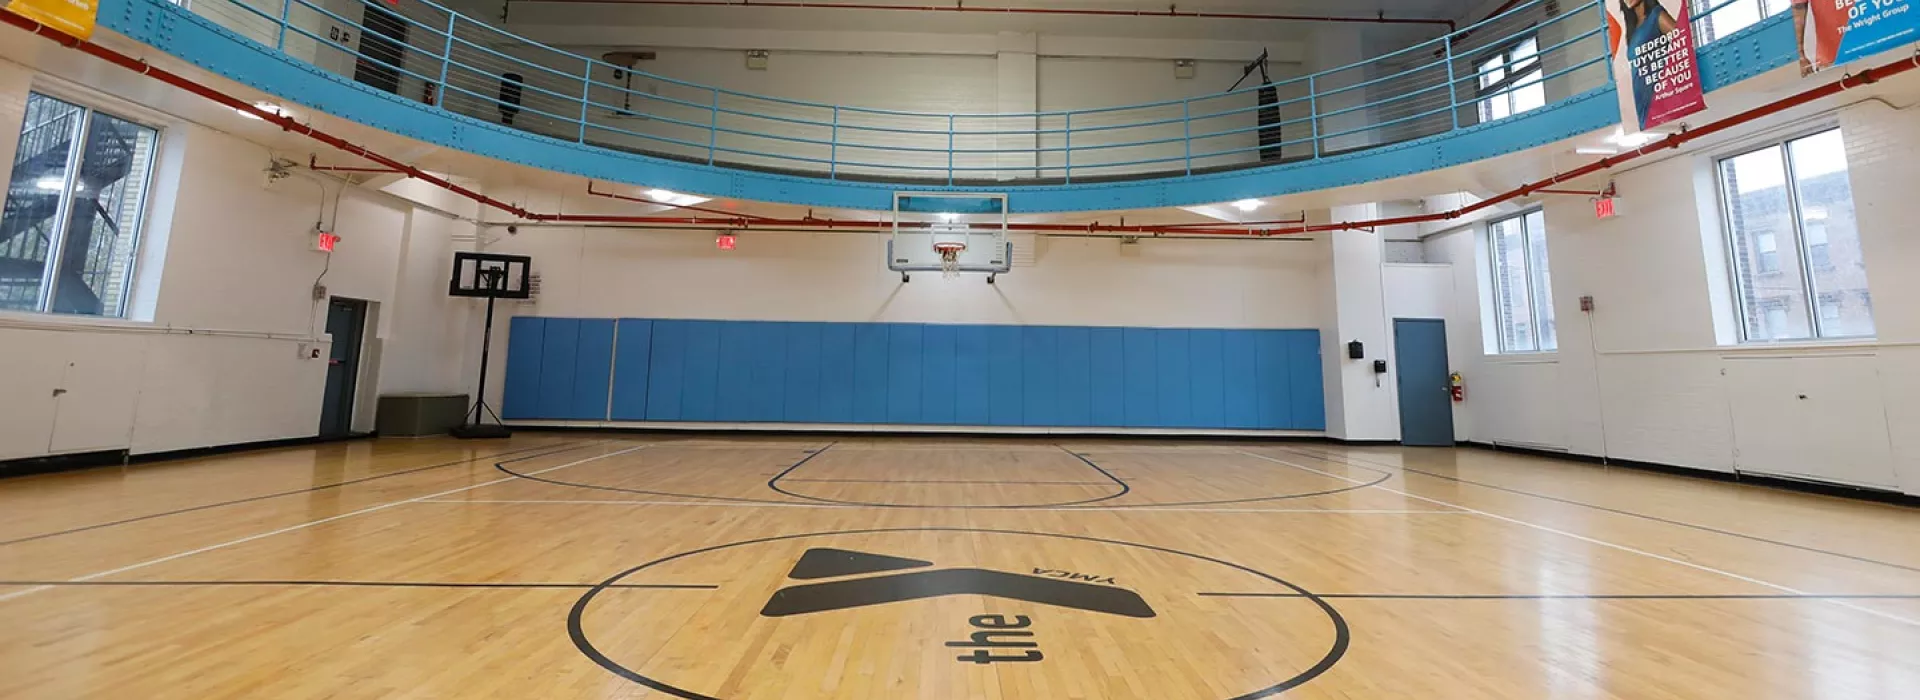  Brooklyn Bklyn New York Bed Stuy Basketball Practice